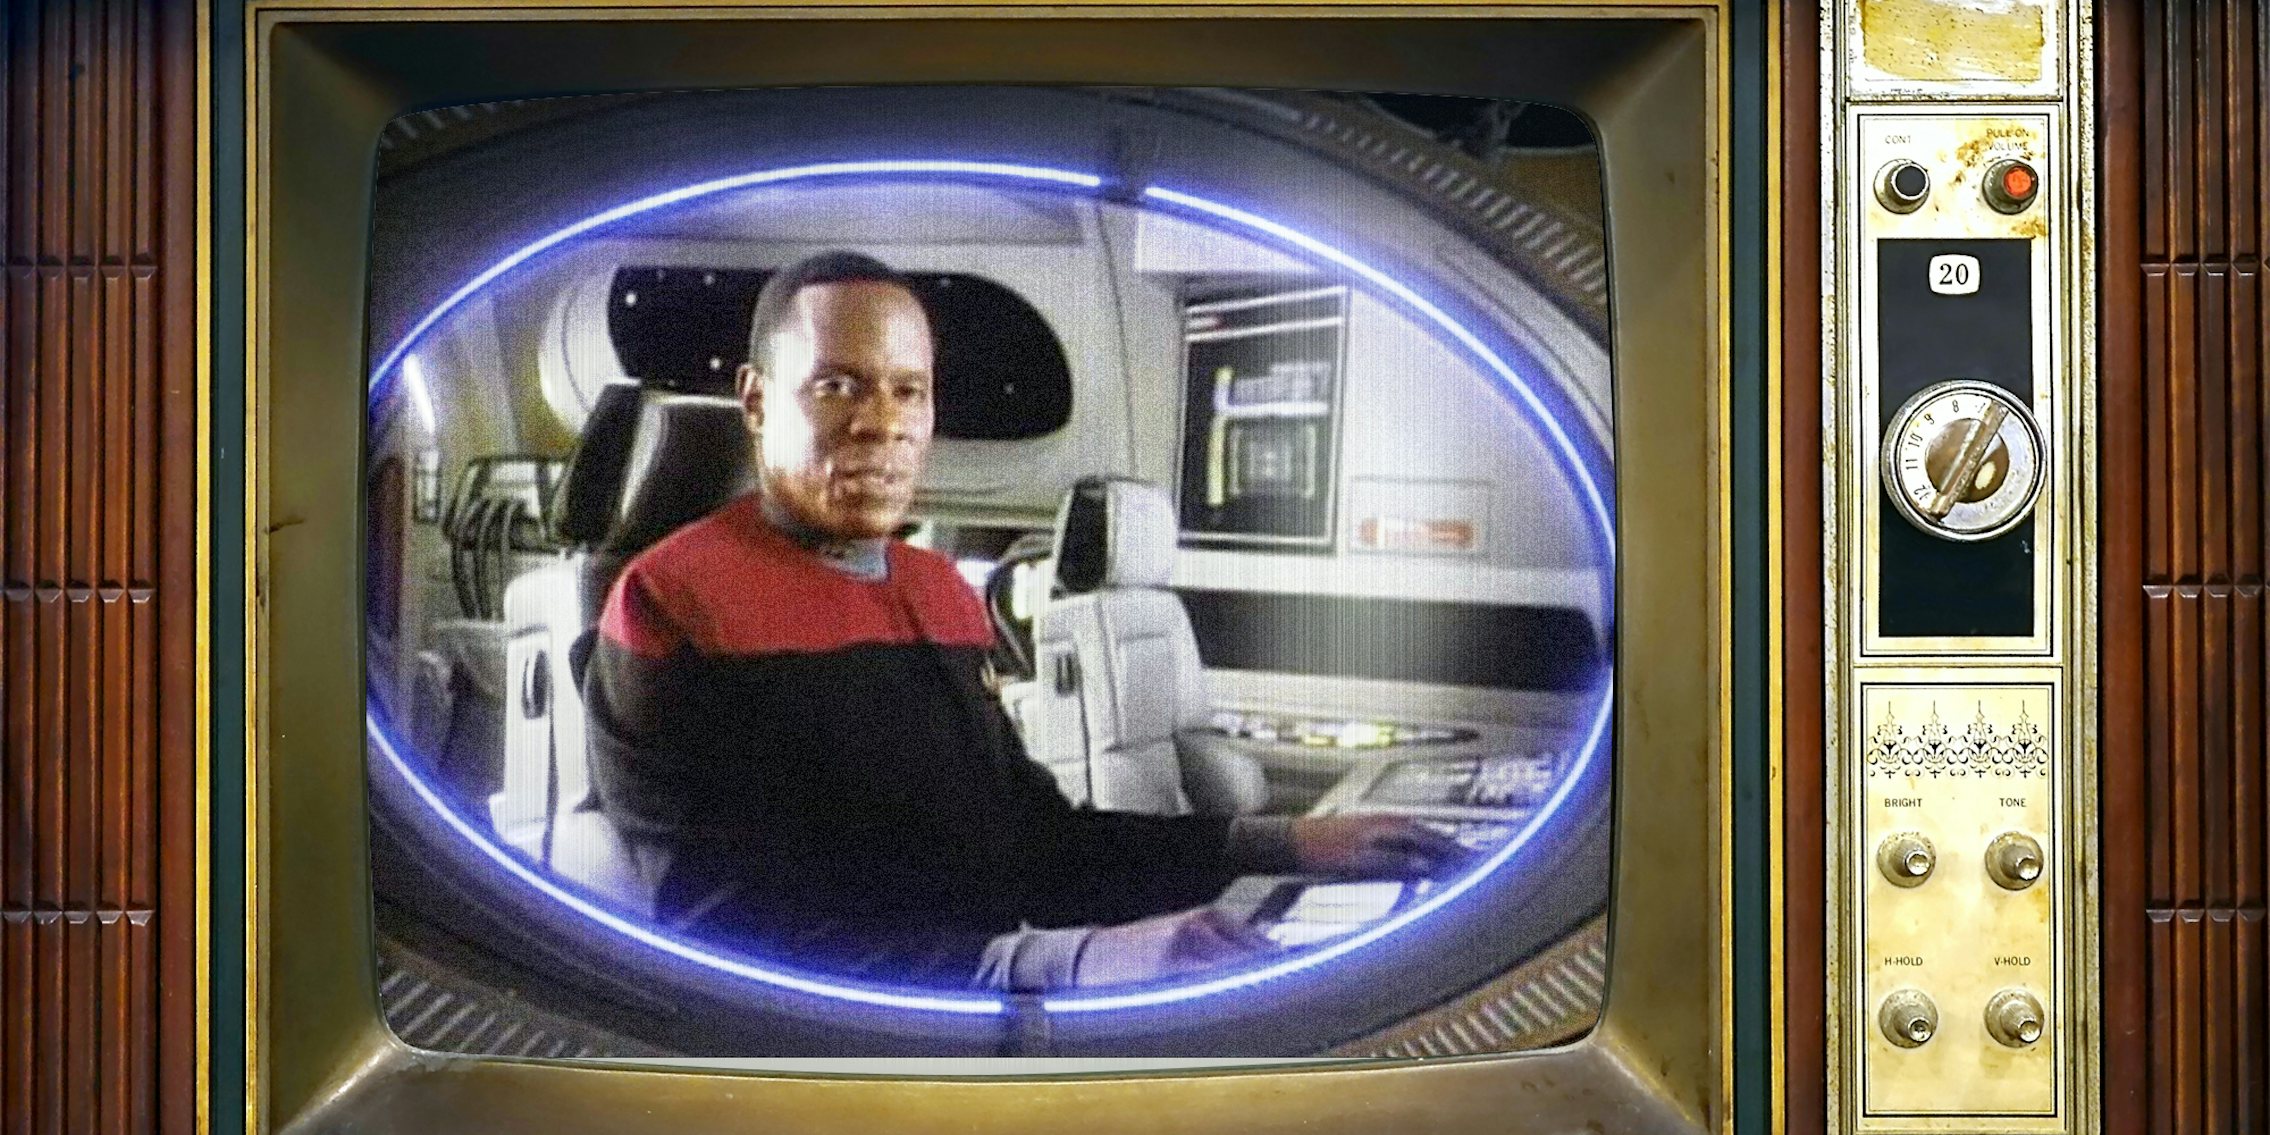 Star Trek: Deep Space 9 on old analog television set